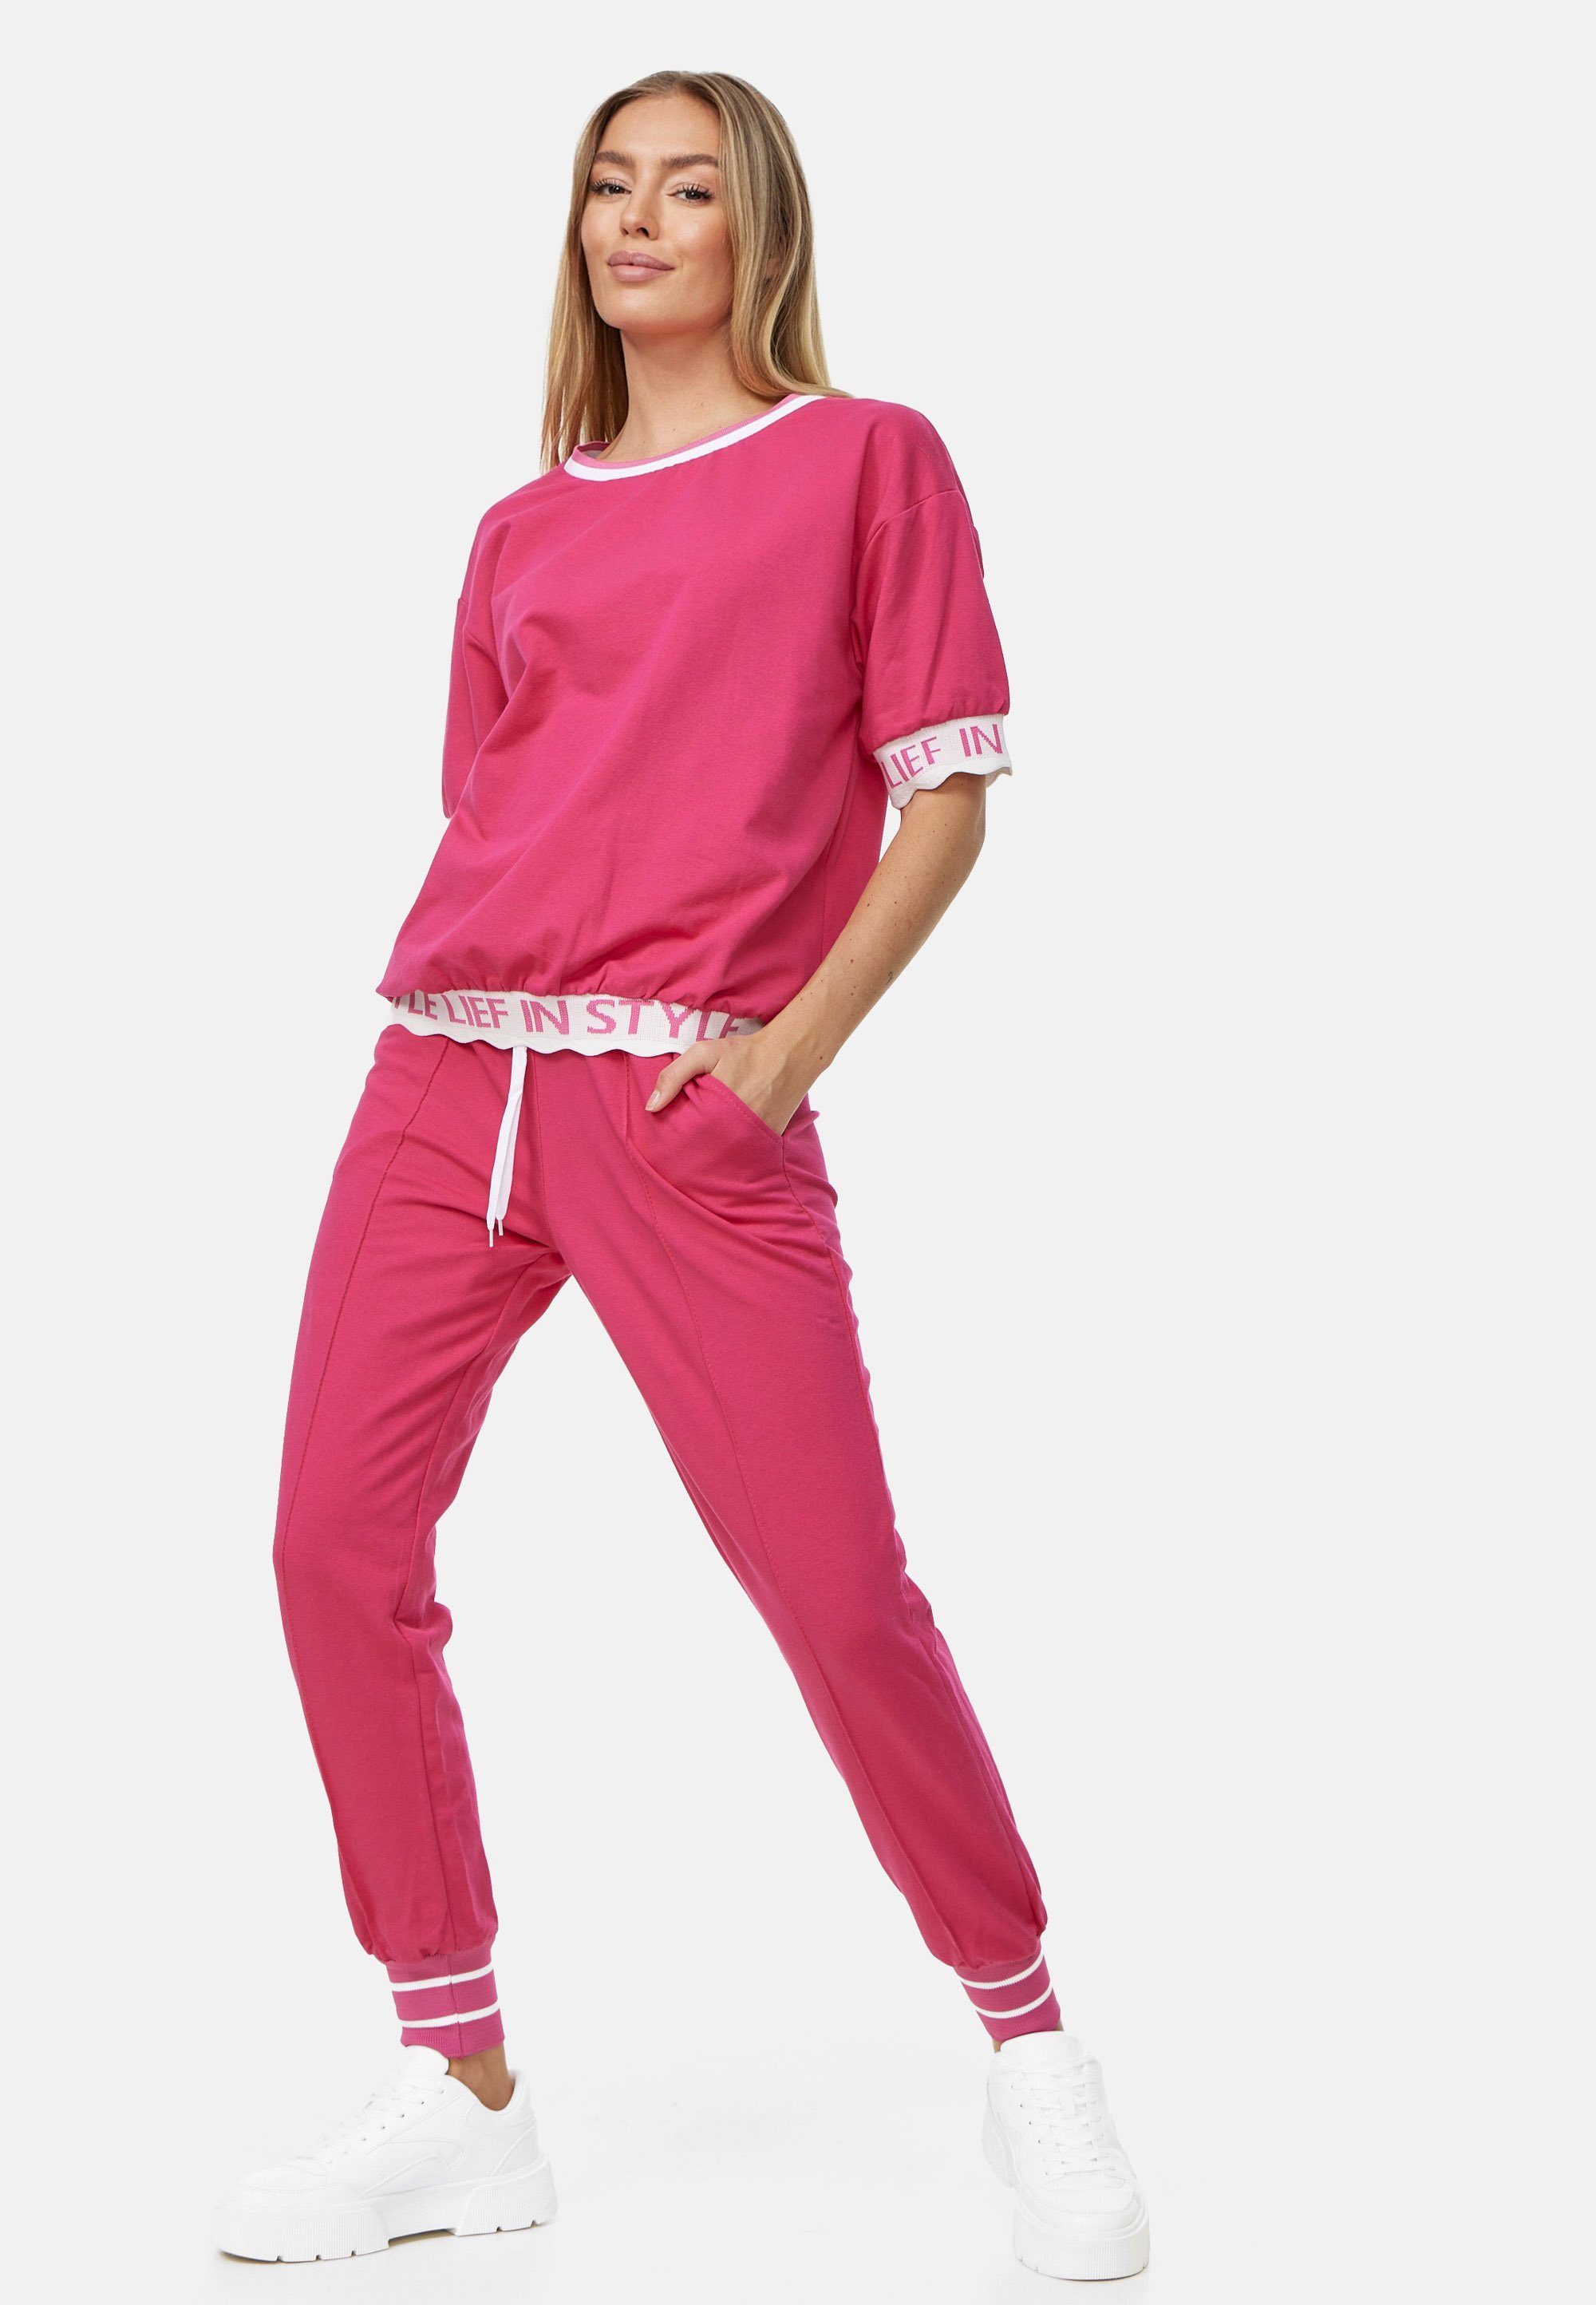 stylishem Schriftzug rosa Decay mit T-Shirt